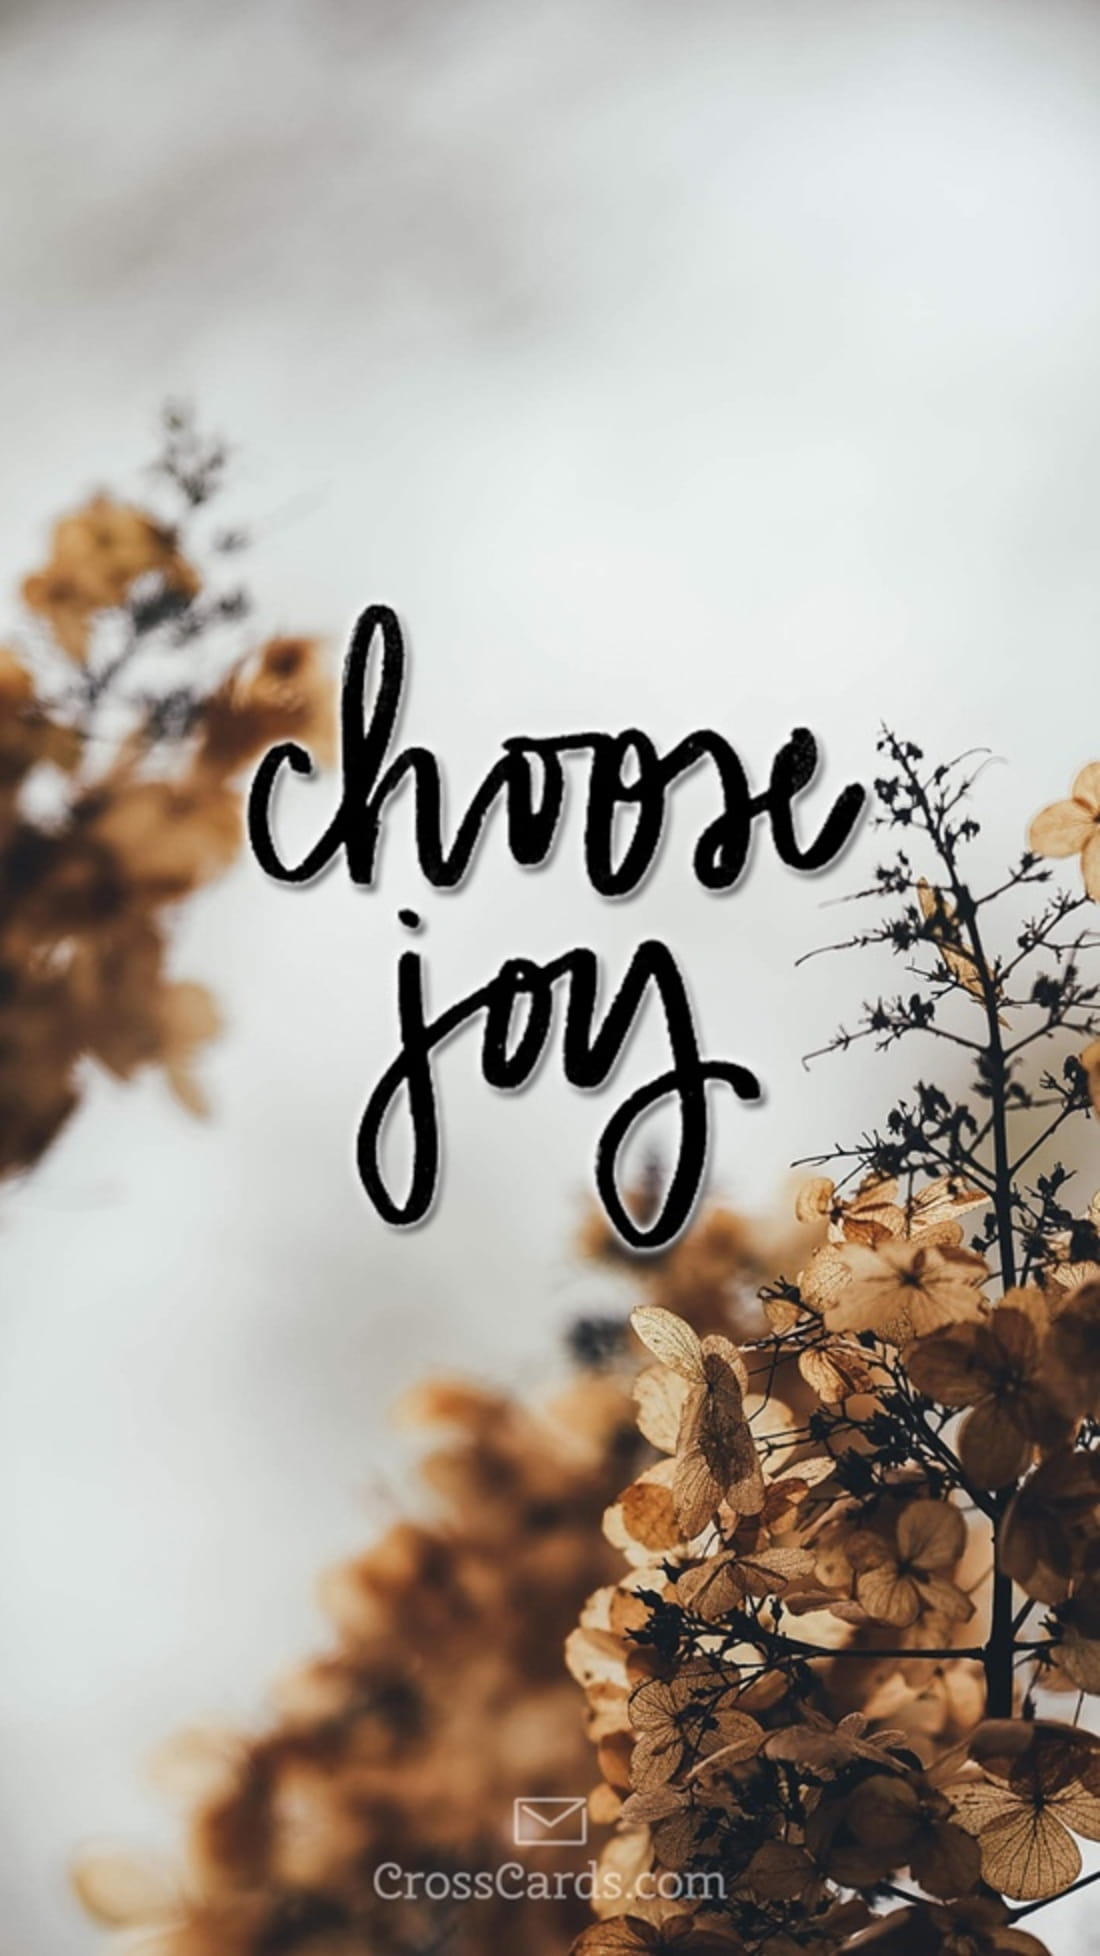 Choose Joy mobile phone wallpaper